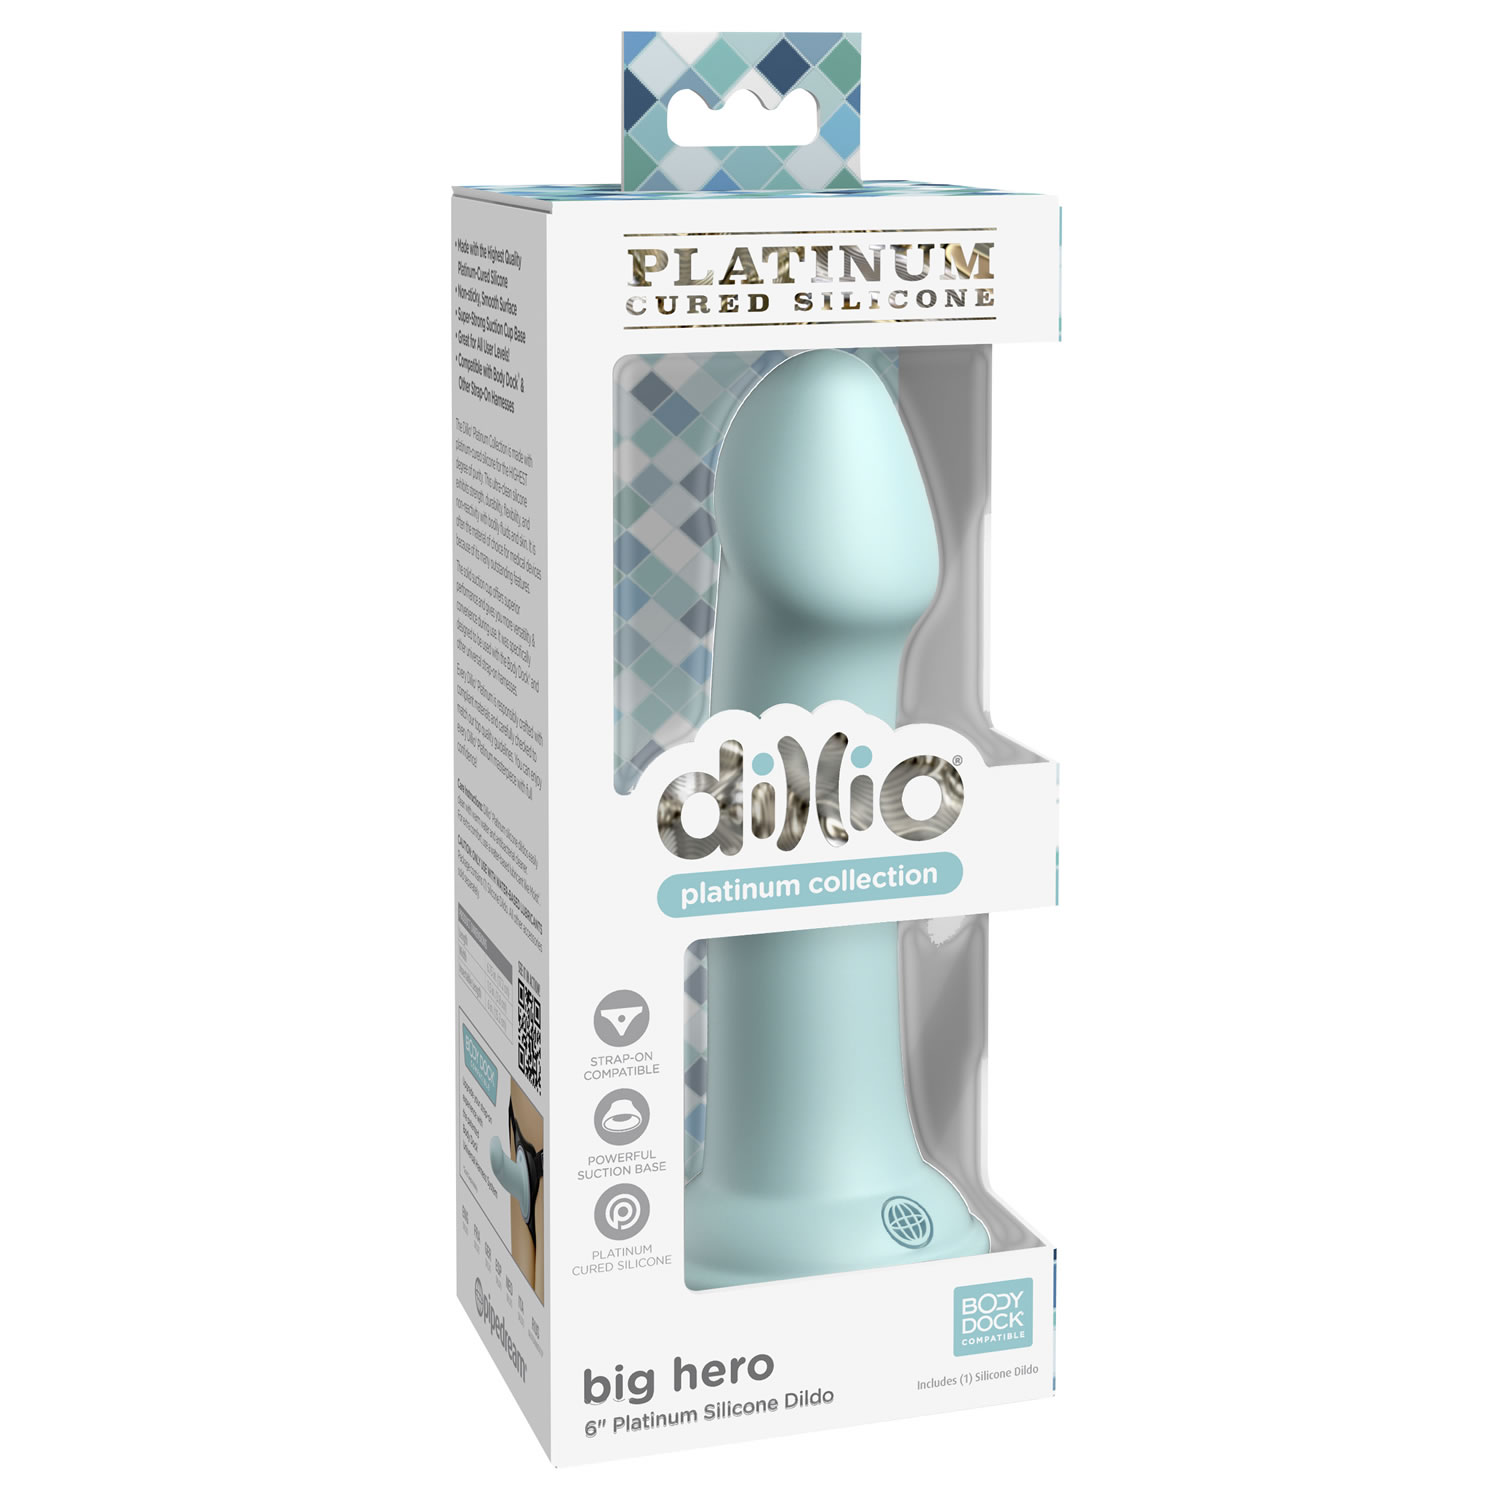 Dillio Platinum Big Hero Dildo with Suction Base